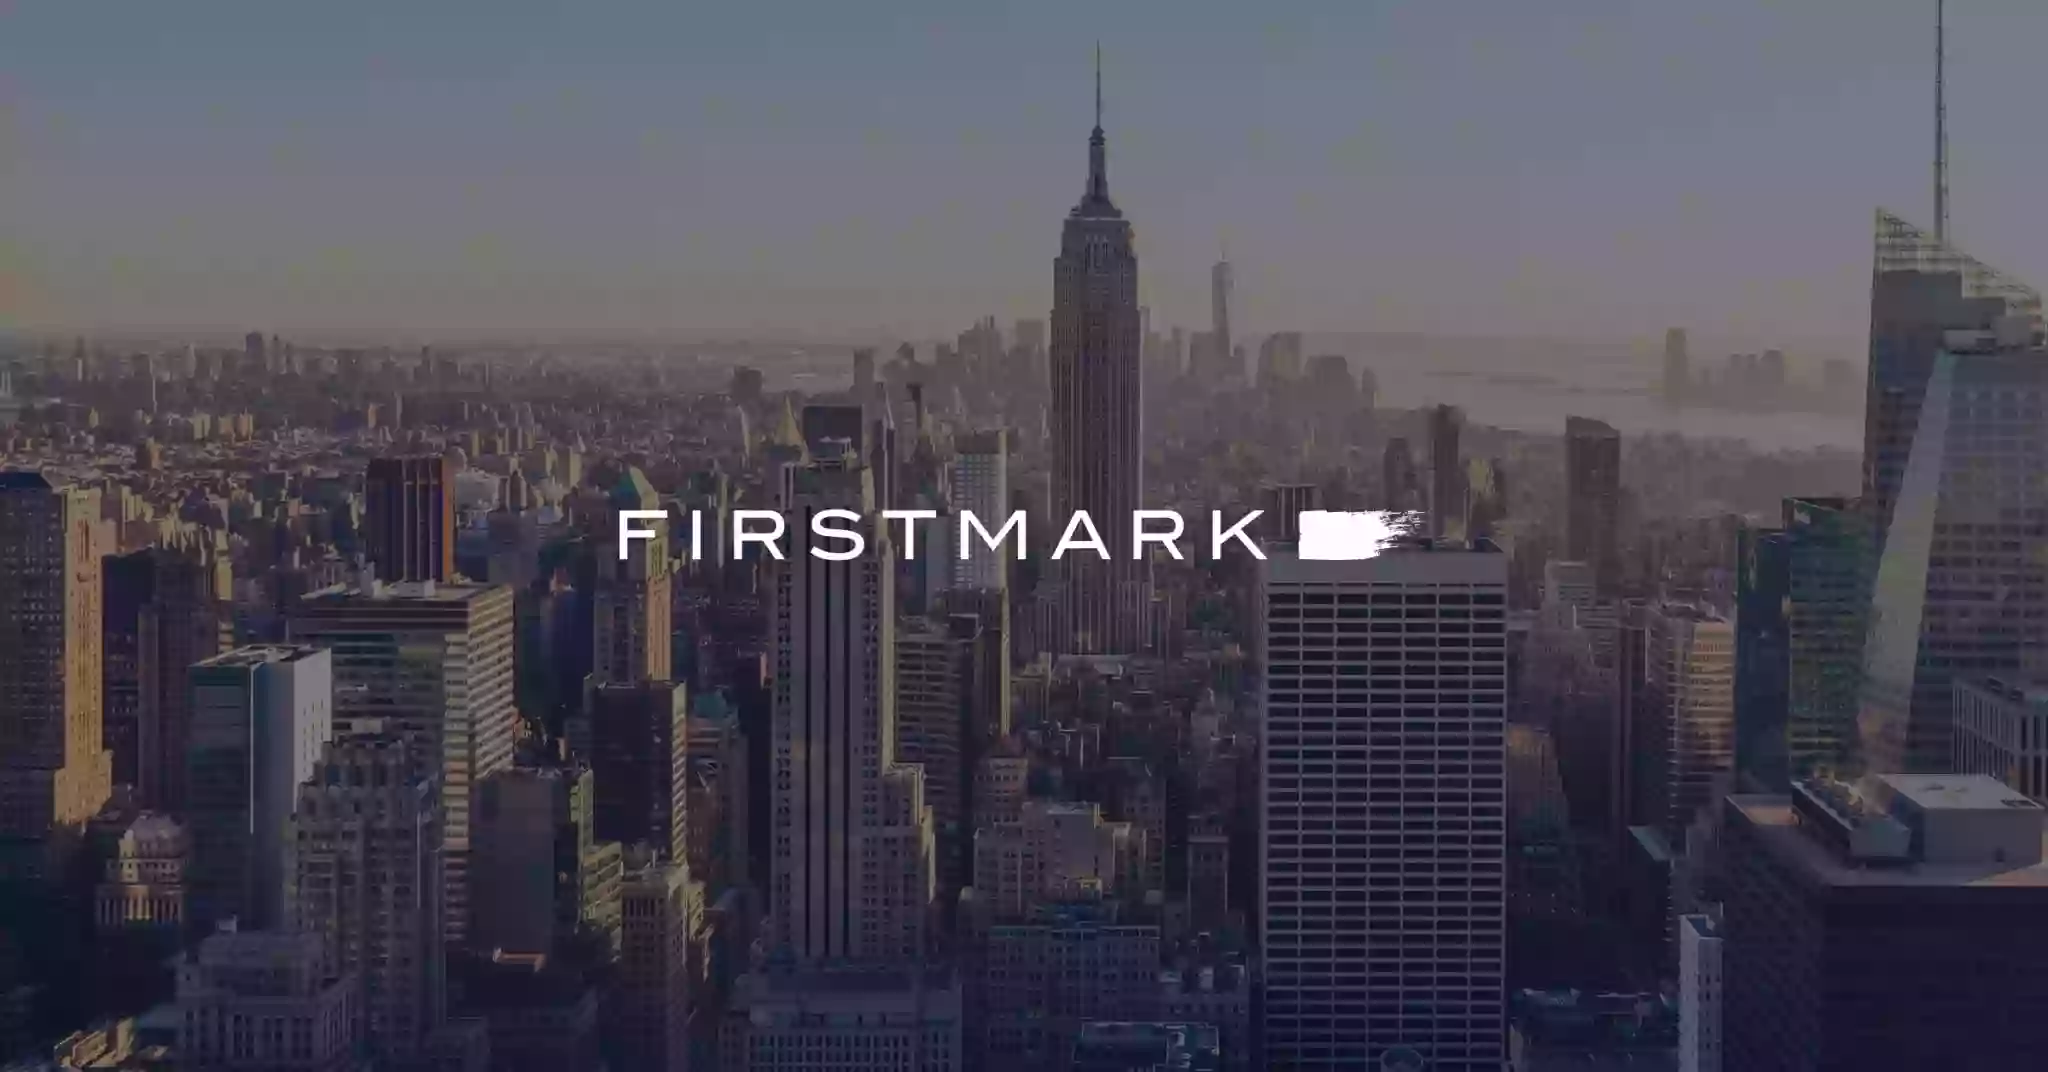 F1rstmark, Inc.